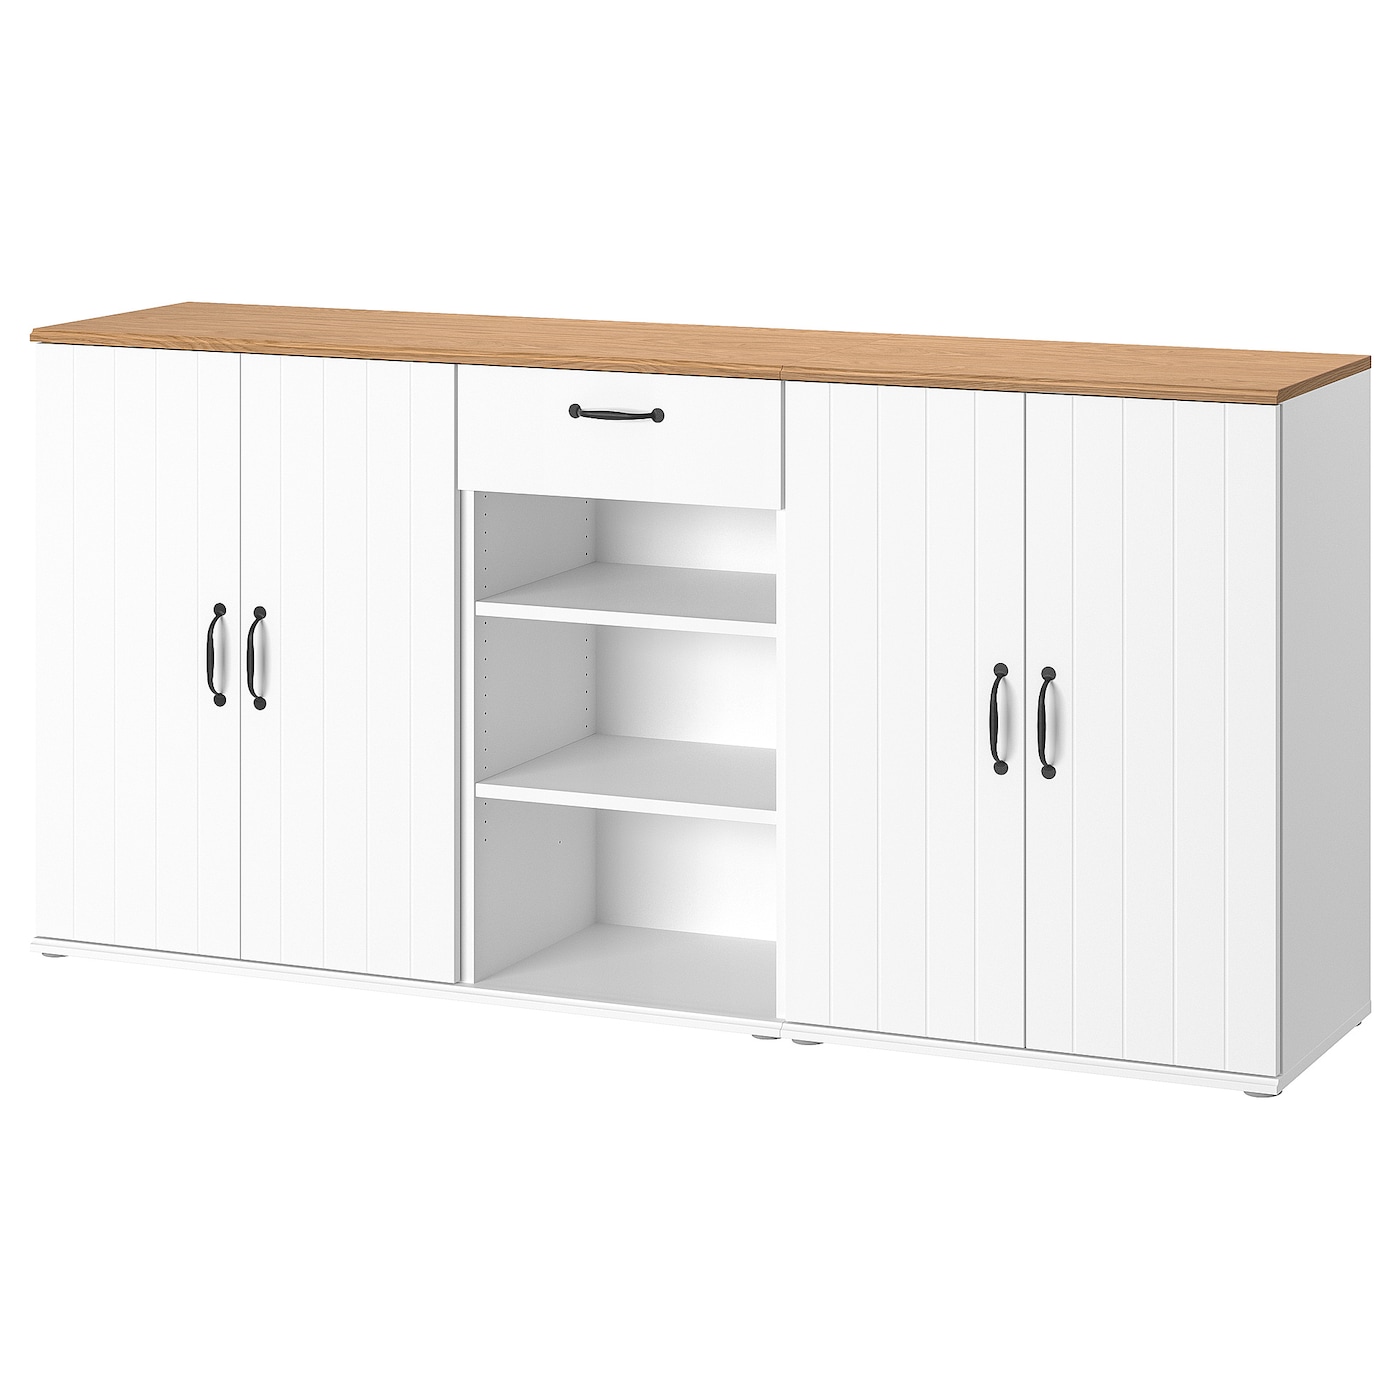 Шкаф - SKRUVBY  IKEA/ СКРУВБИ ИКЕА, 90х190 см, белый/под беленый дуб